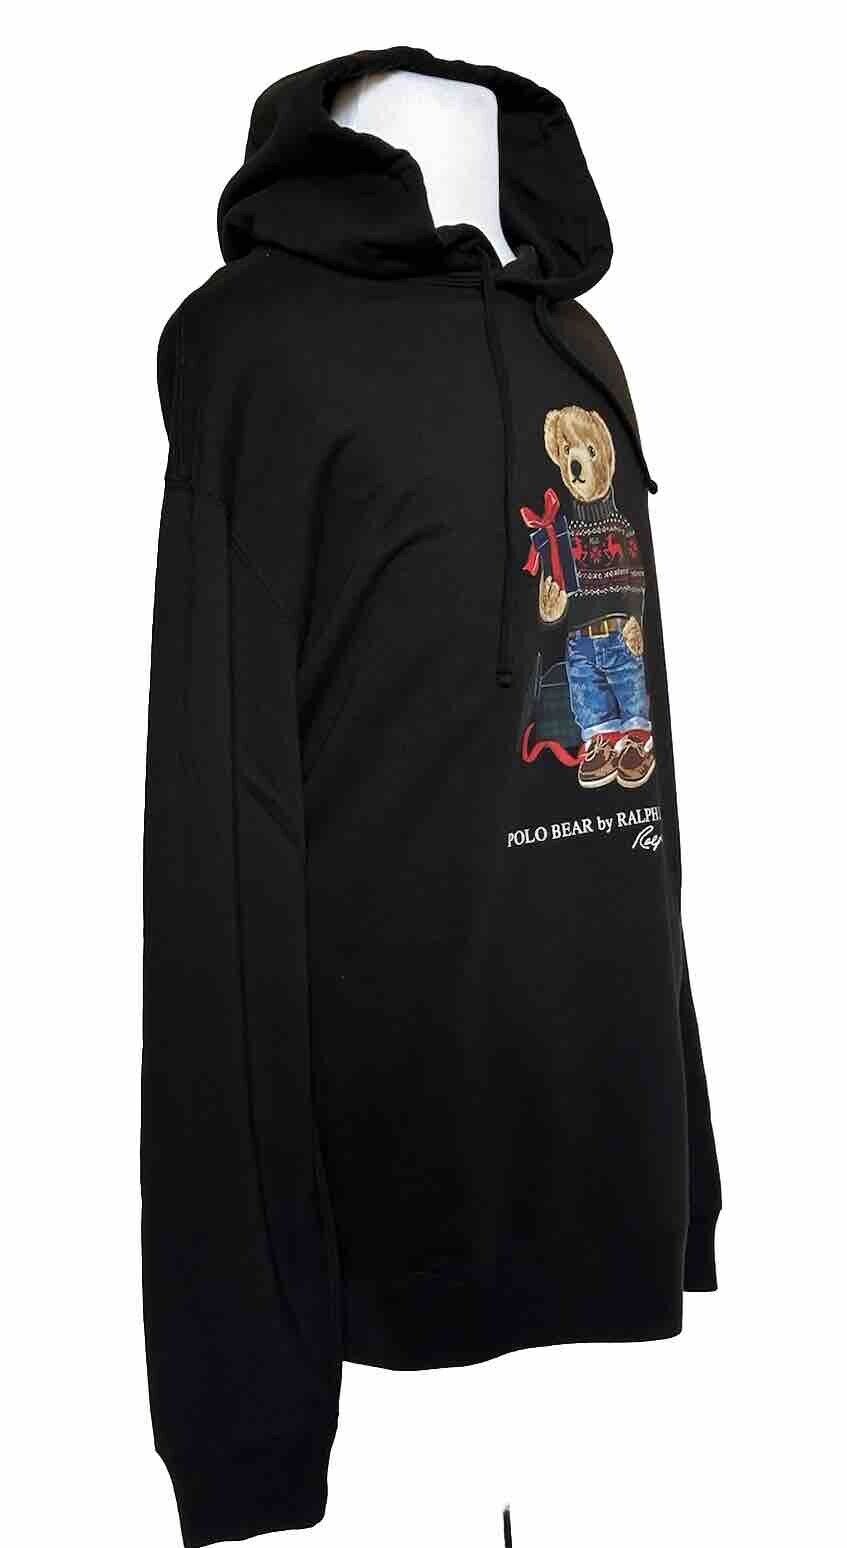 NWT $188 Polo Ralph Lauren Holiday Bear Sweatshirt with Hoodie Black 2XLT/2TGL